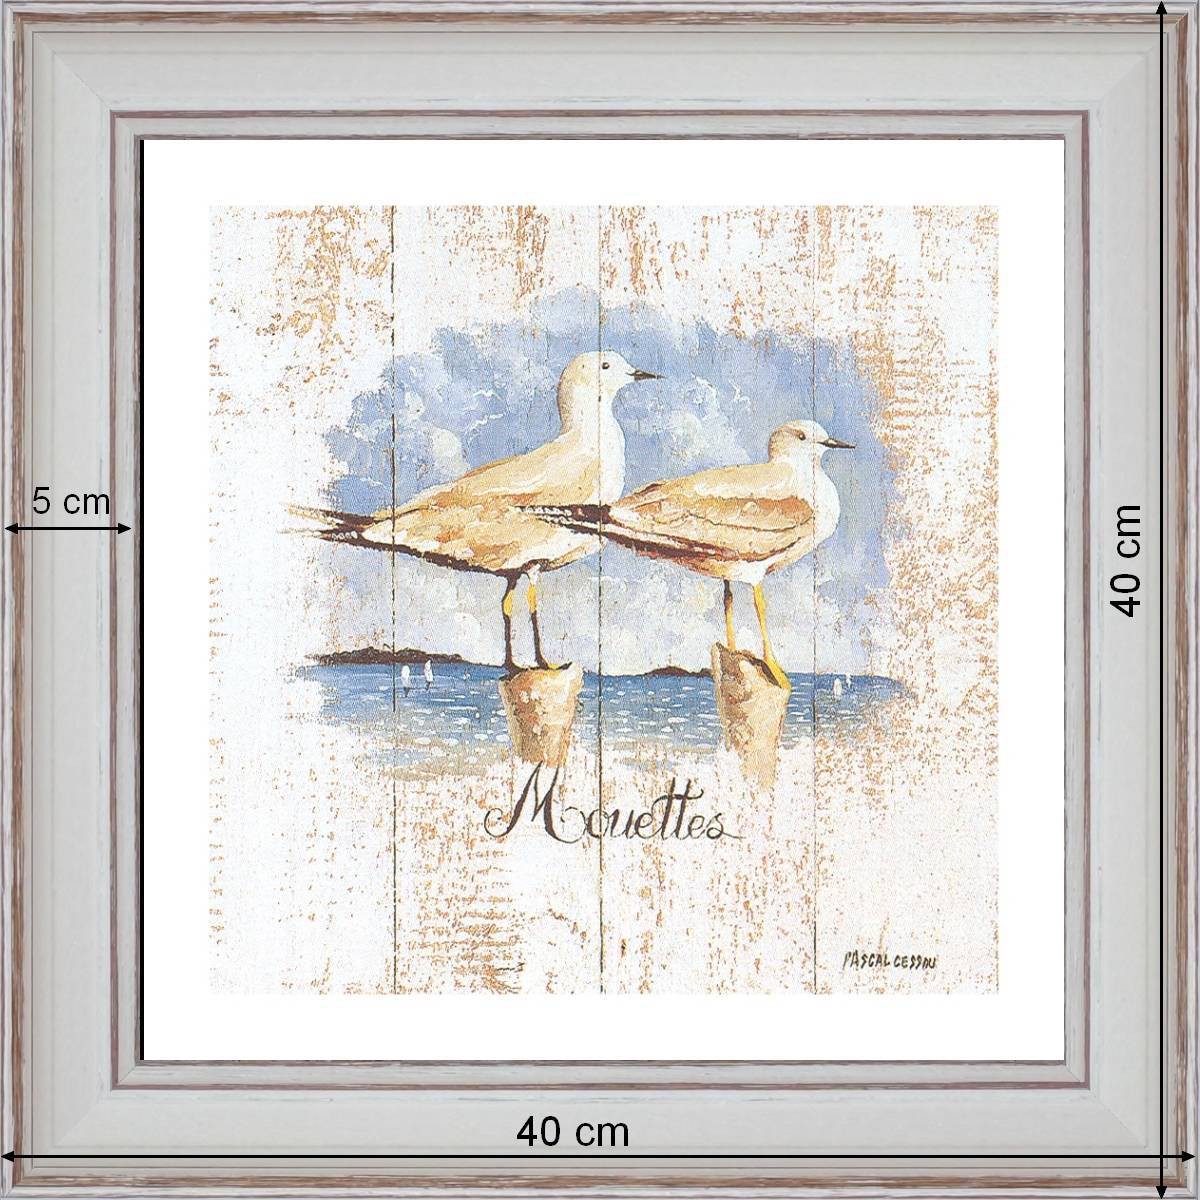 Gulls - dimensions 40 x 40 cm